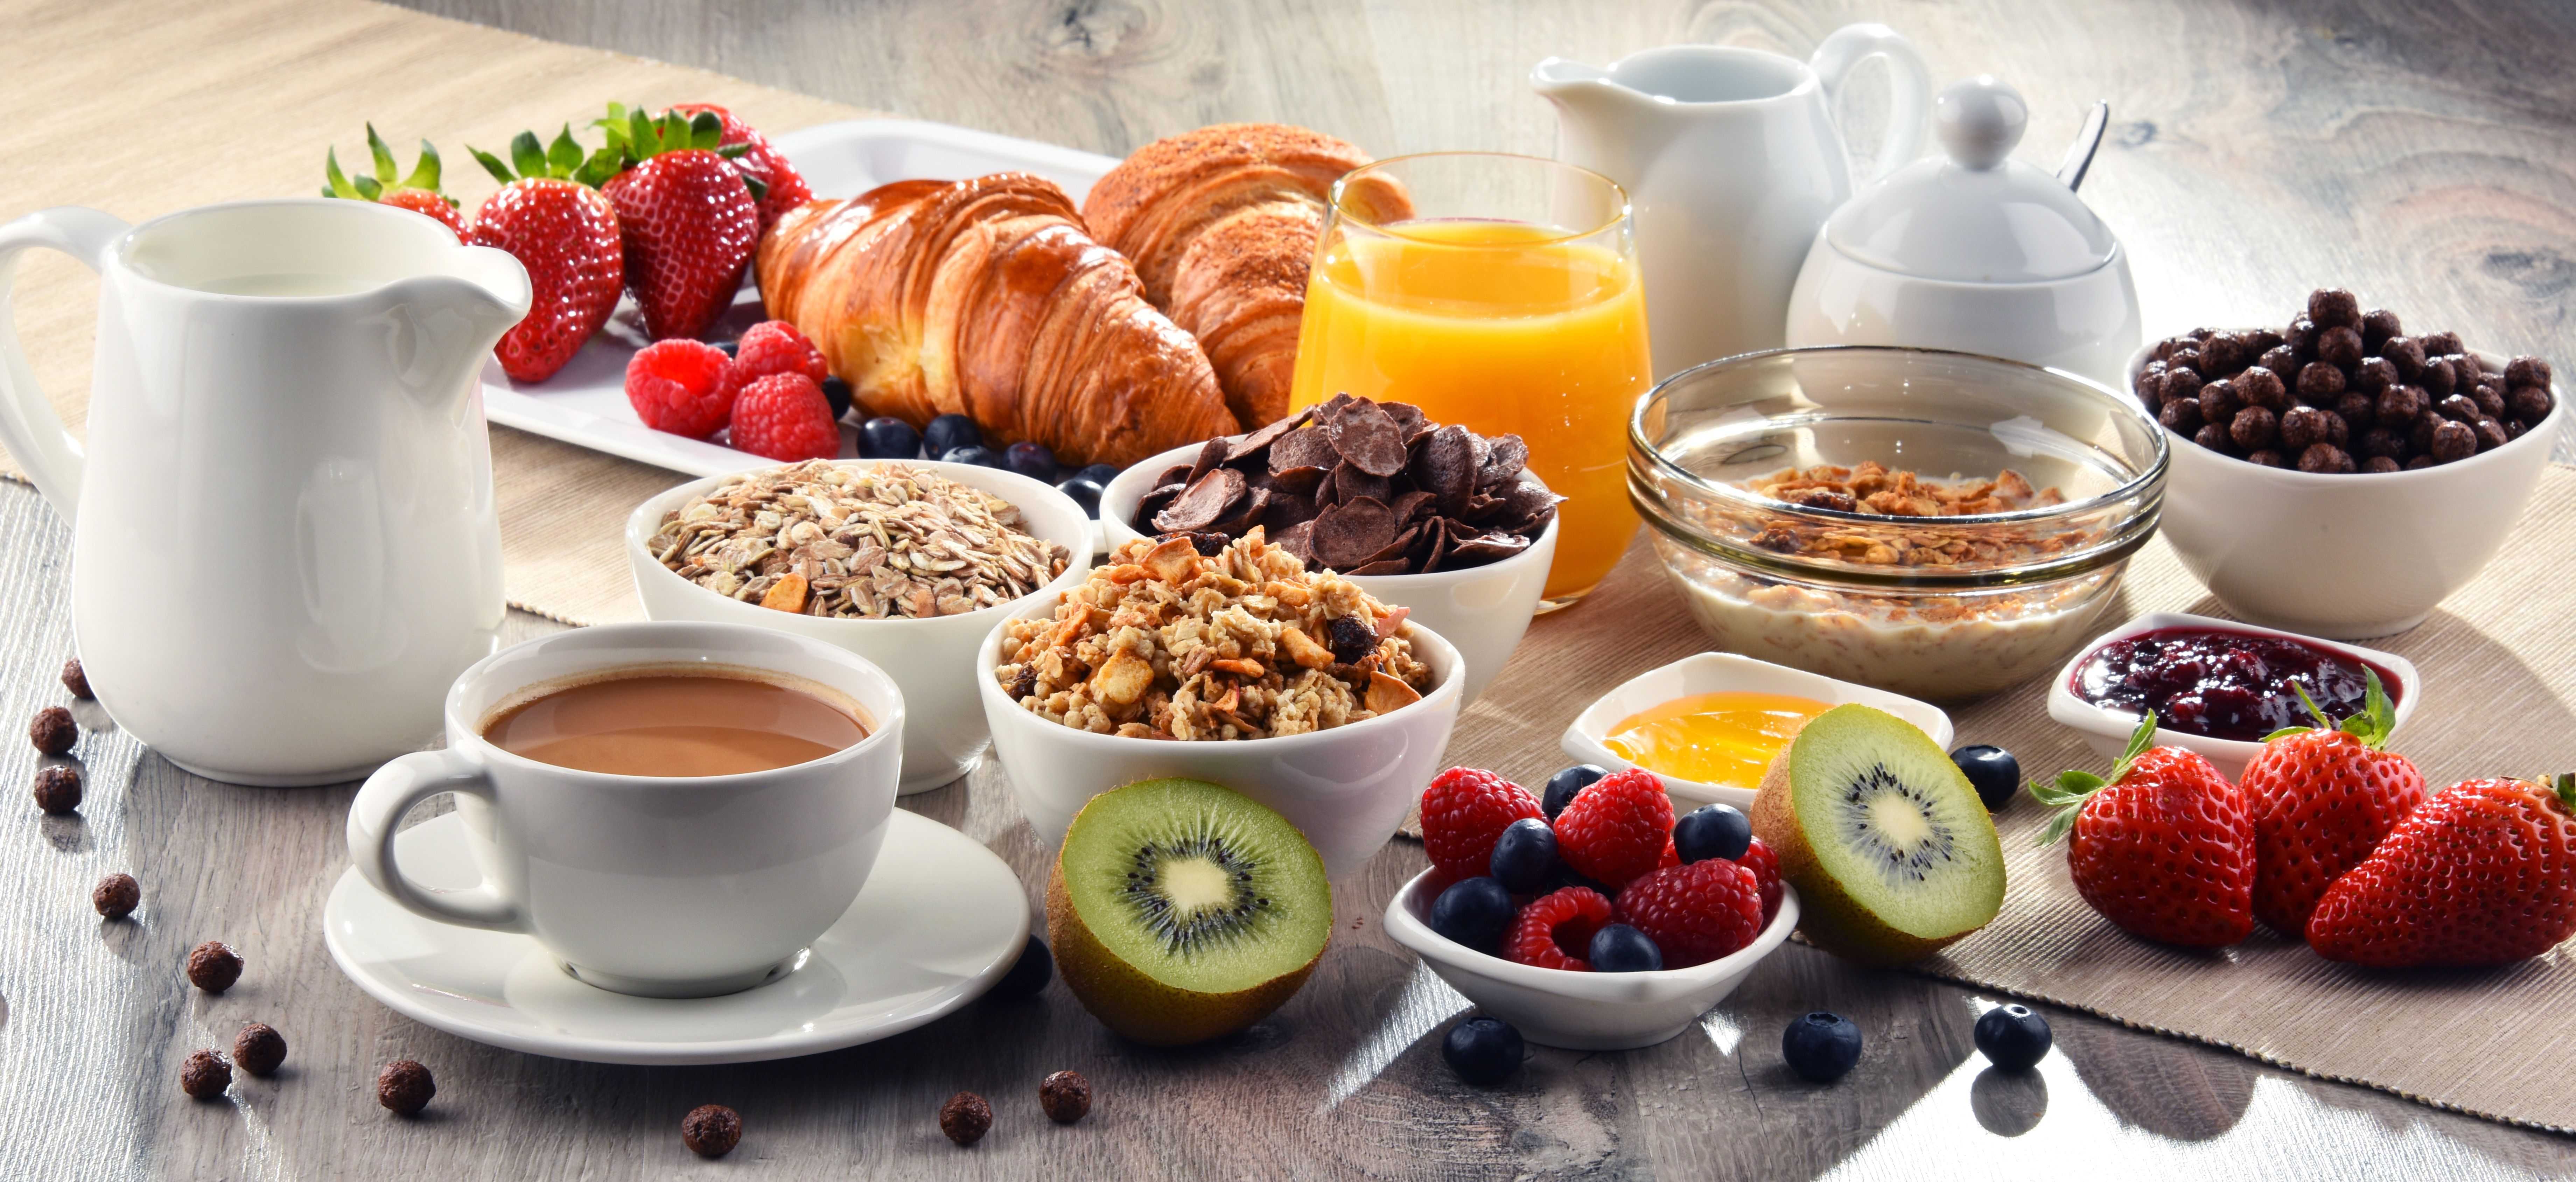 Continental breakfast setup | Source: Shutterstock